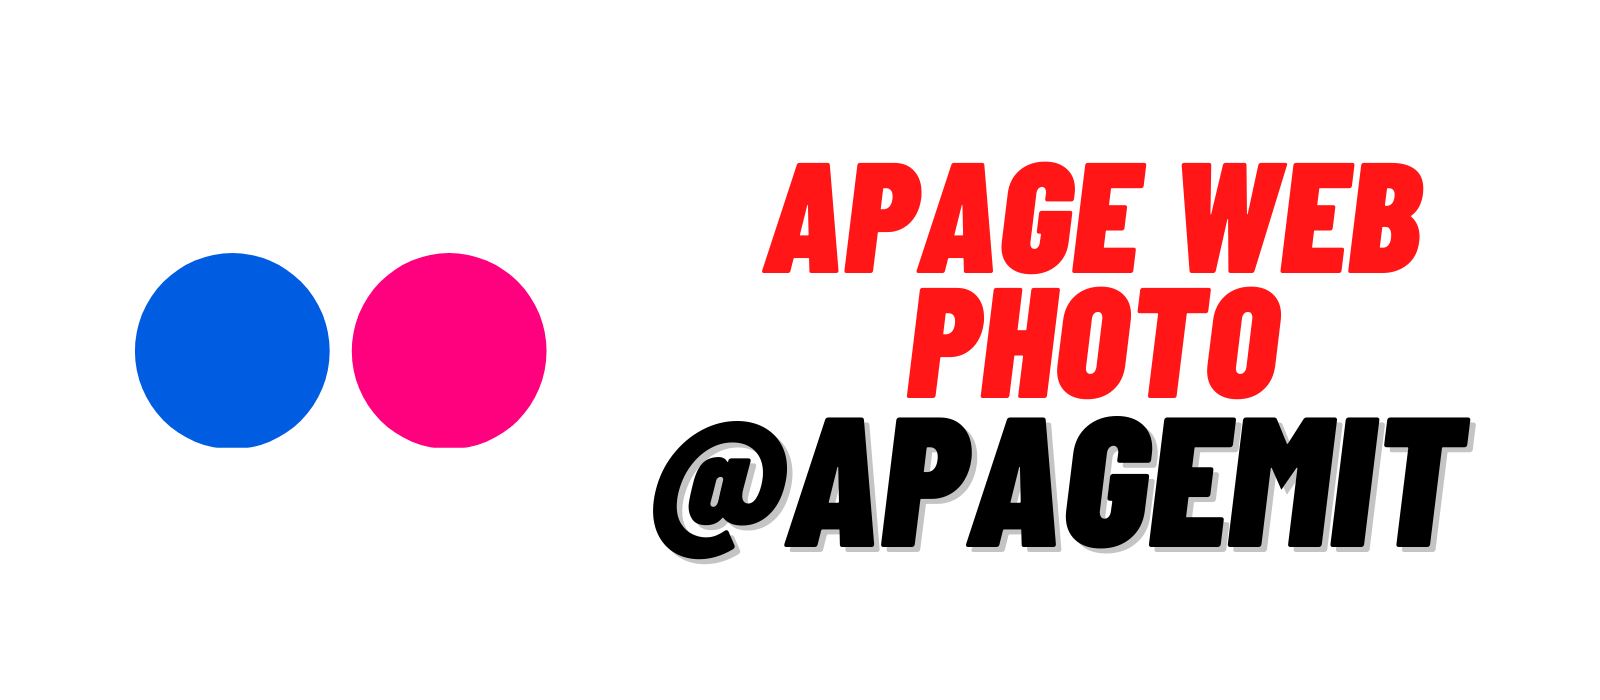 APAGE Flickr